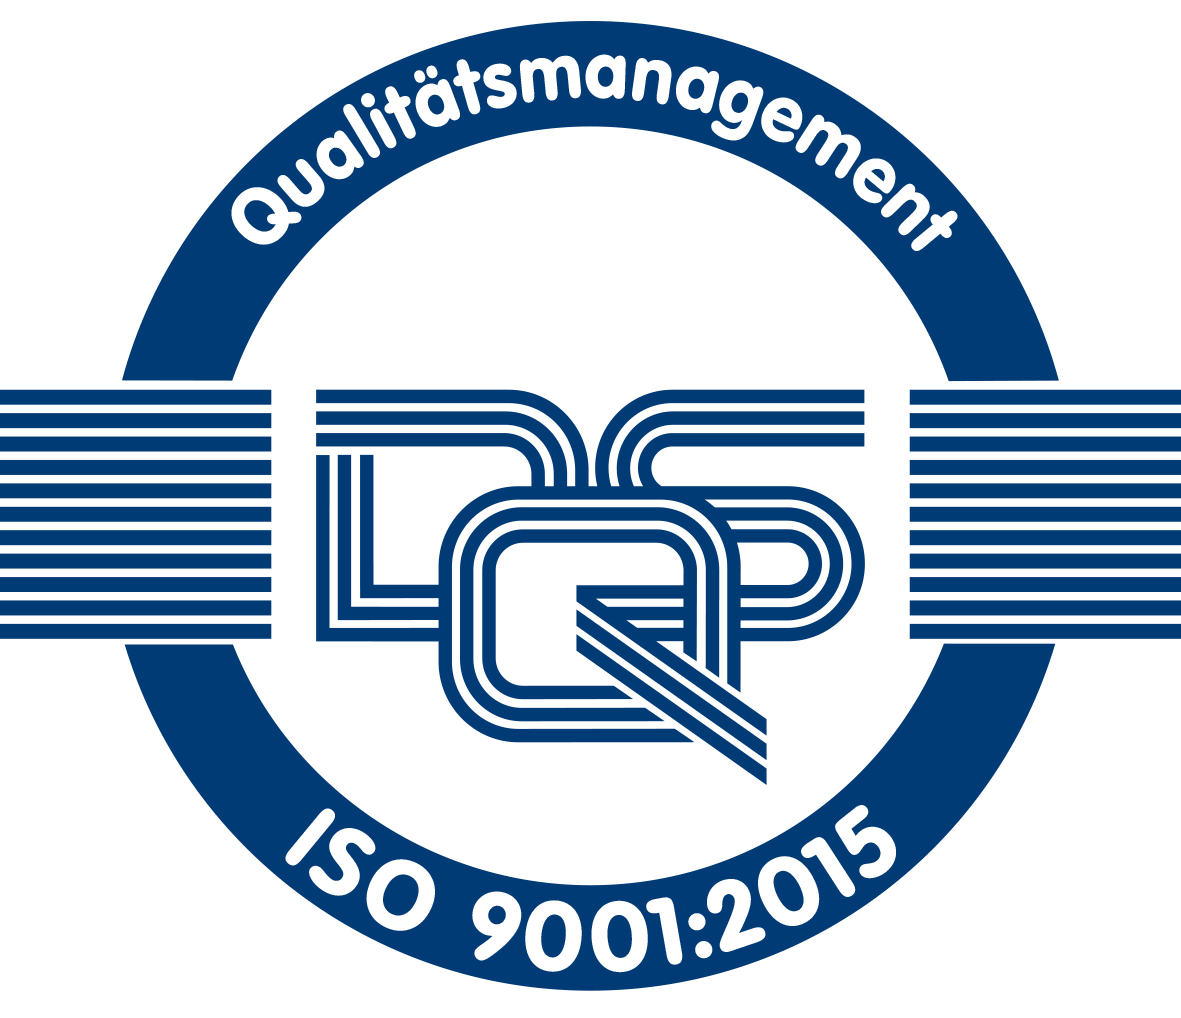 ISO 9001 Deutsch